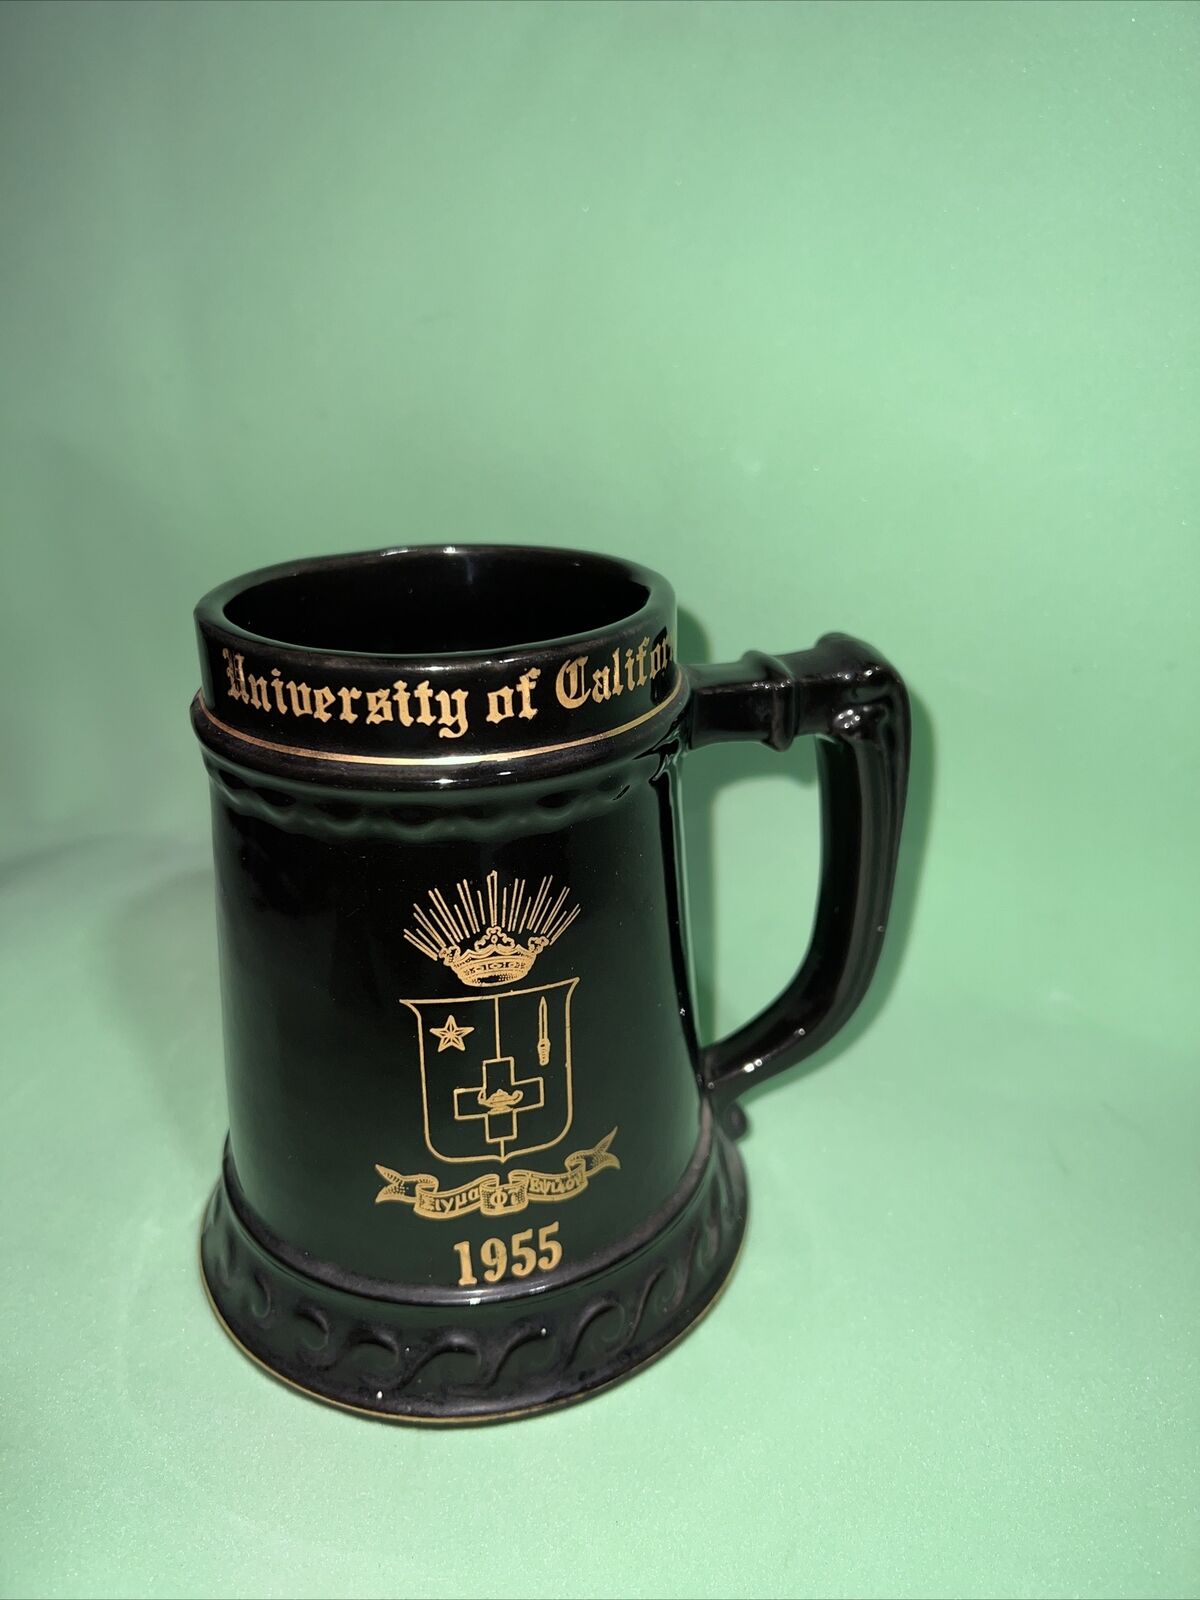 Vintage University of California Ceramic Stein Large Black Mug 1955 SBC TOULOUSE